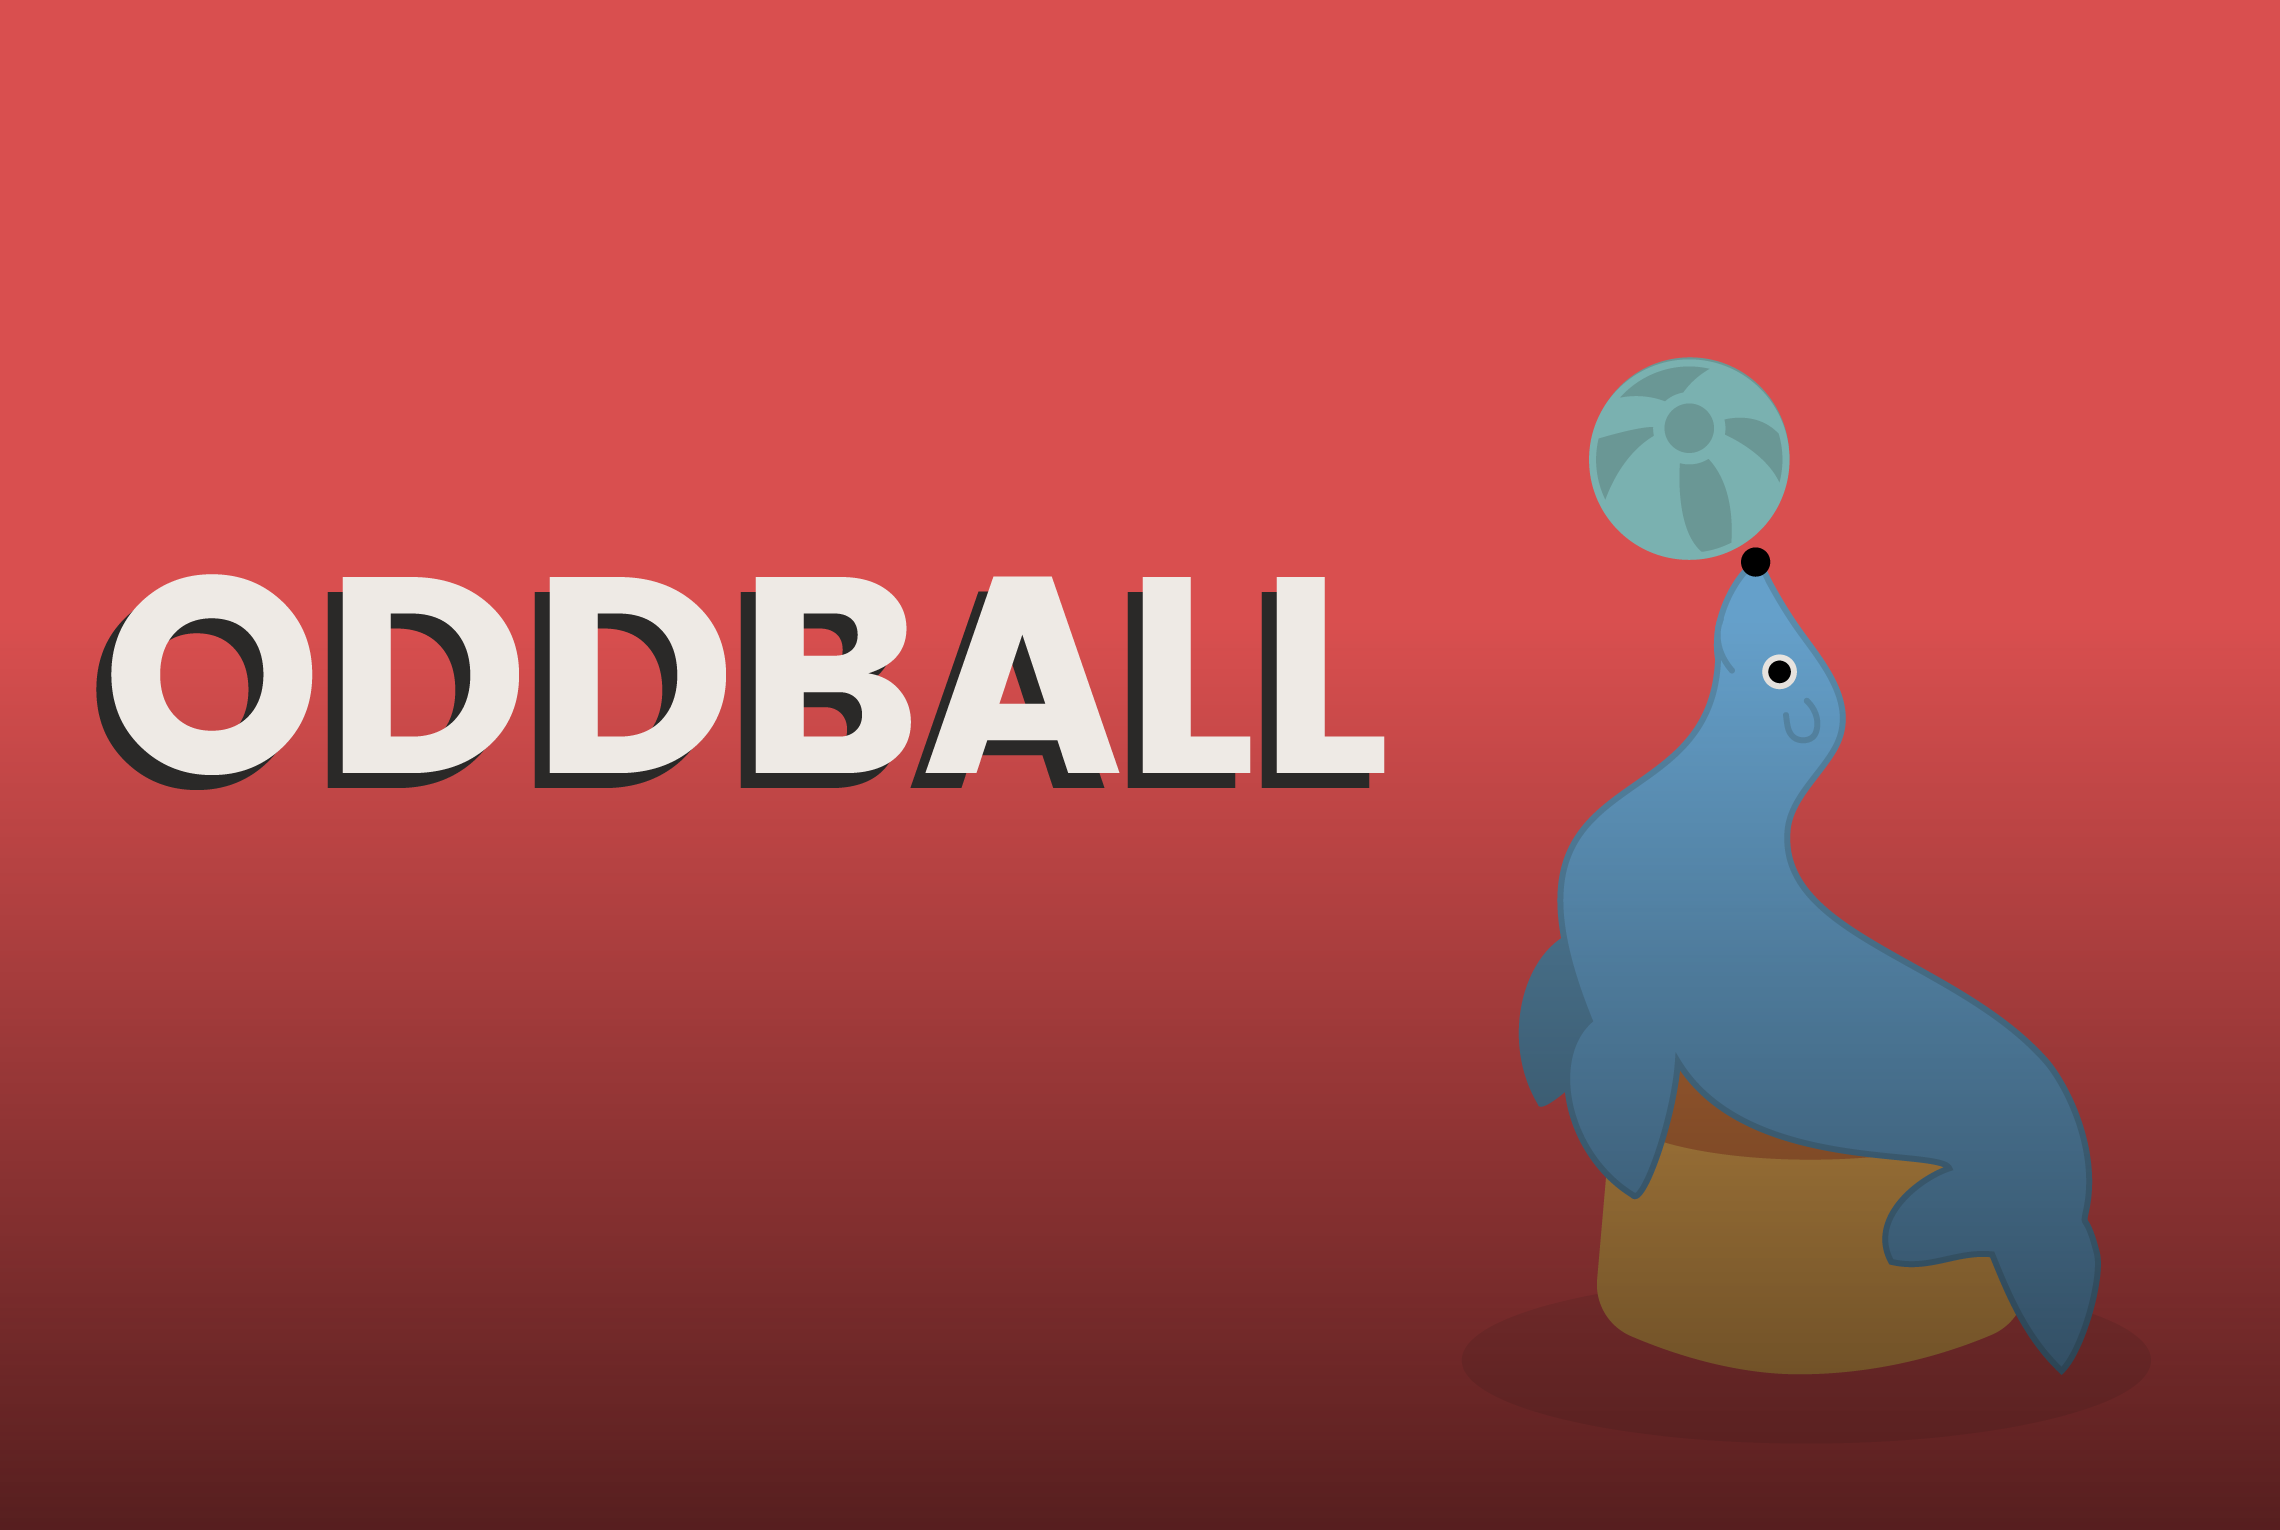 Oddball - a game on Funbrain